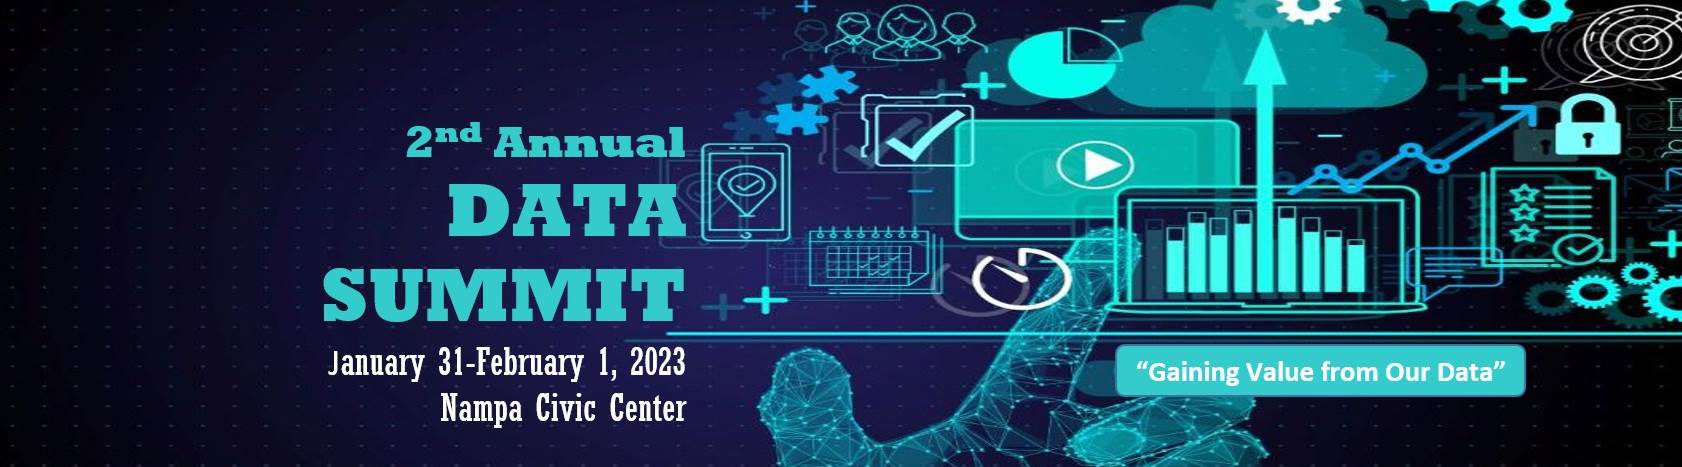 2nd Annual Data Summit